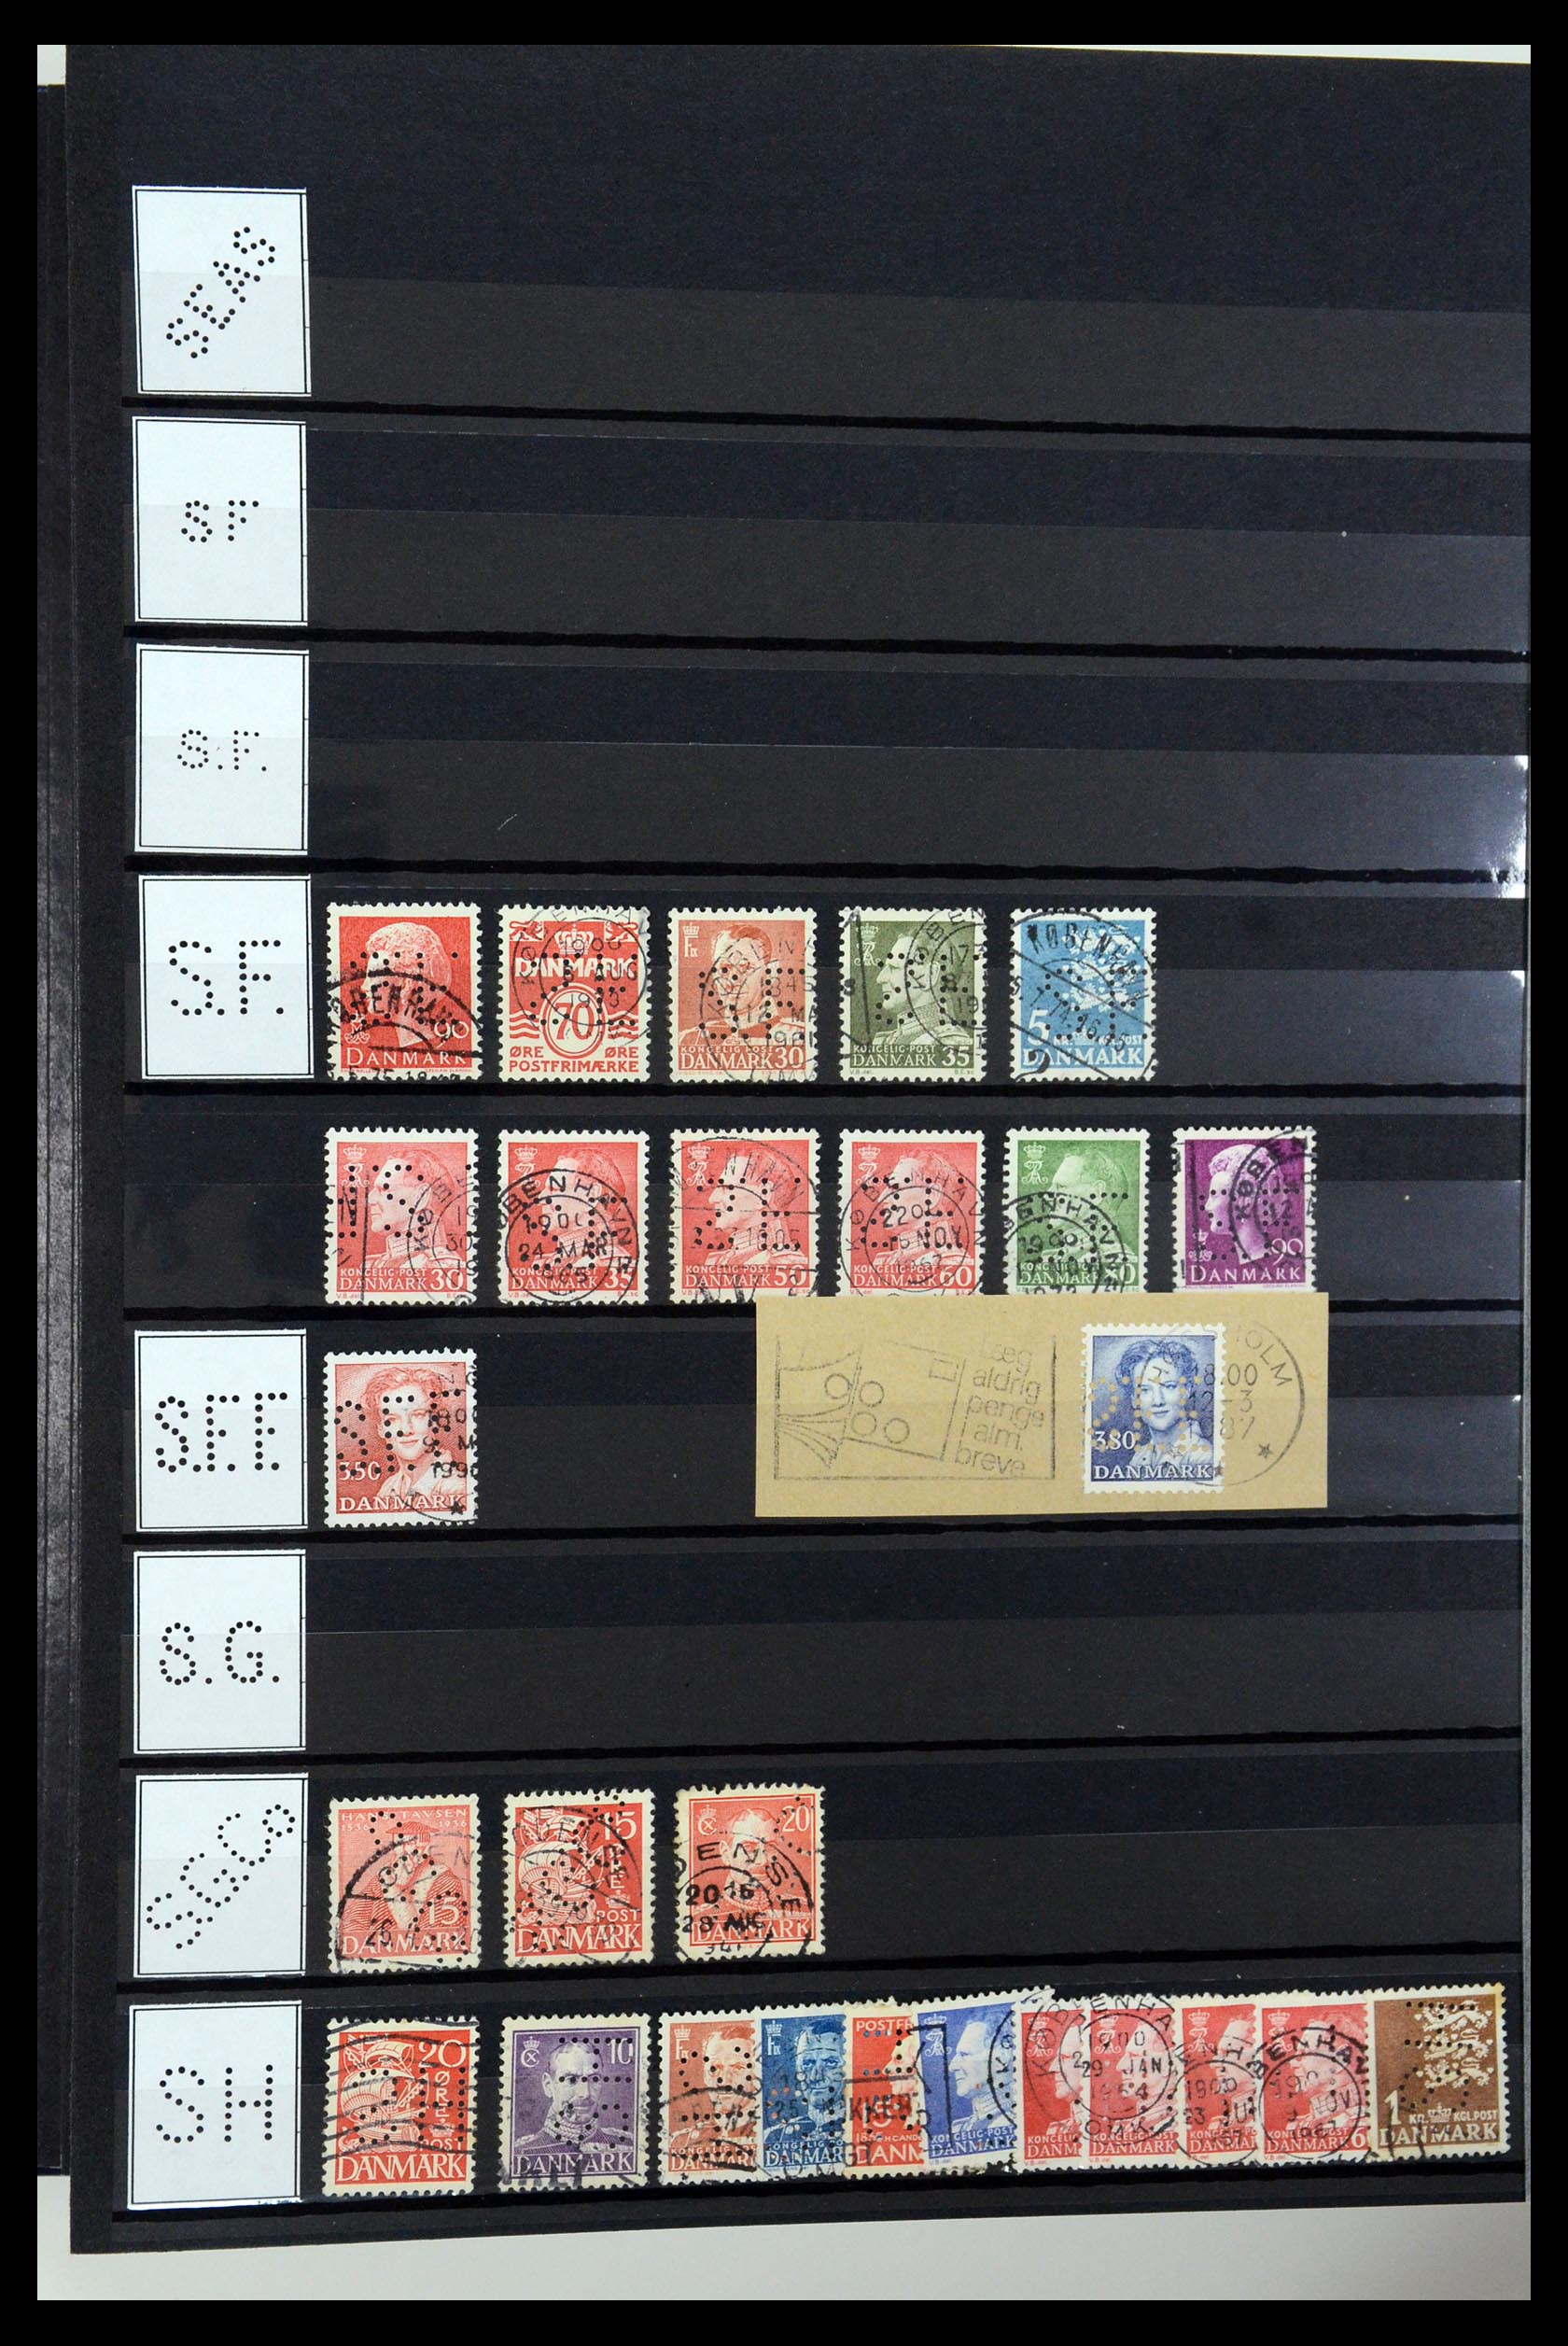 36396 206 - Stamp collection 36396 Denmark perfins.